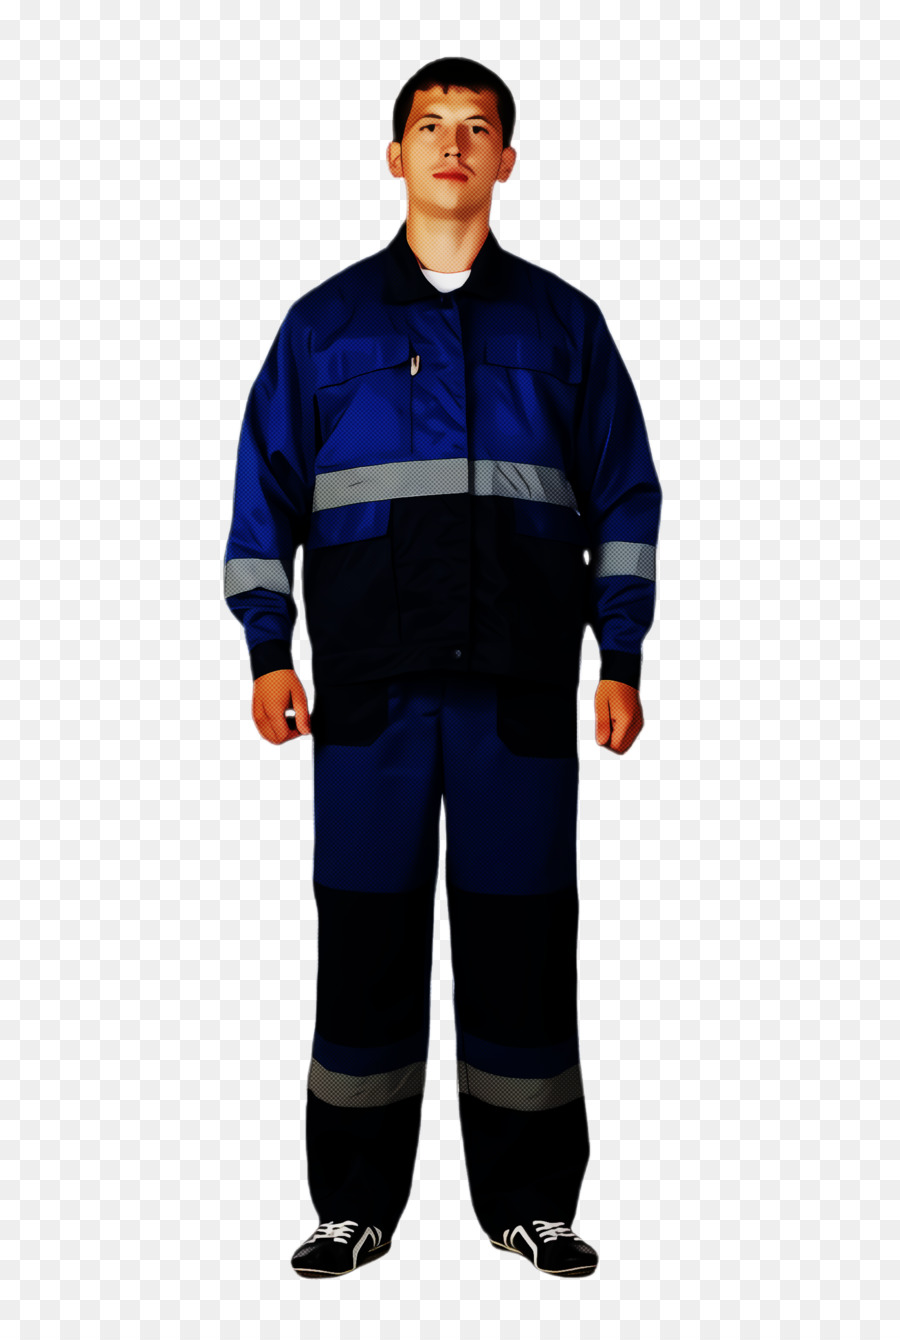 clothing blue martial arts uniform uniform workwear